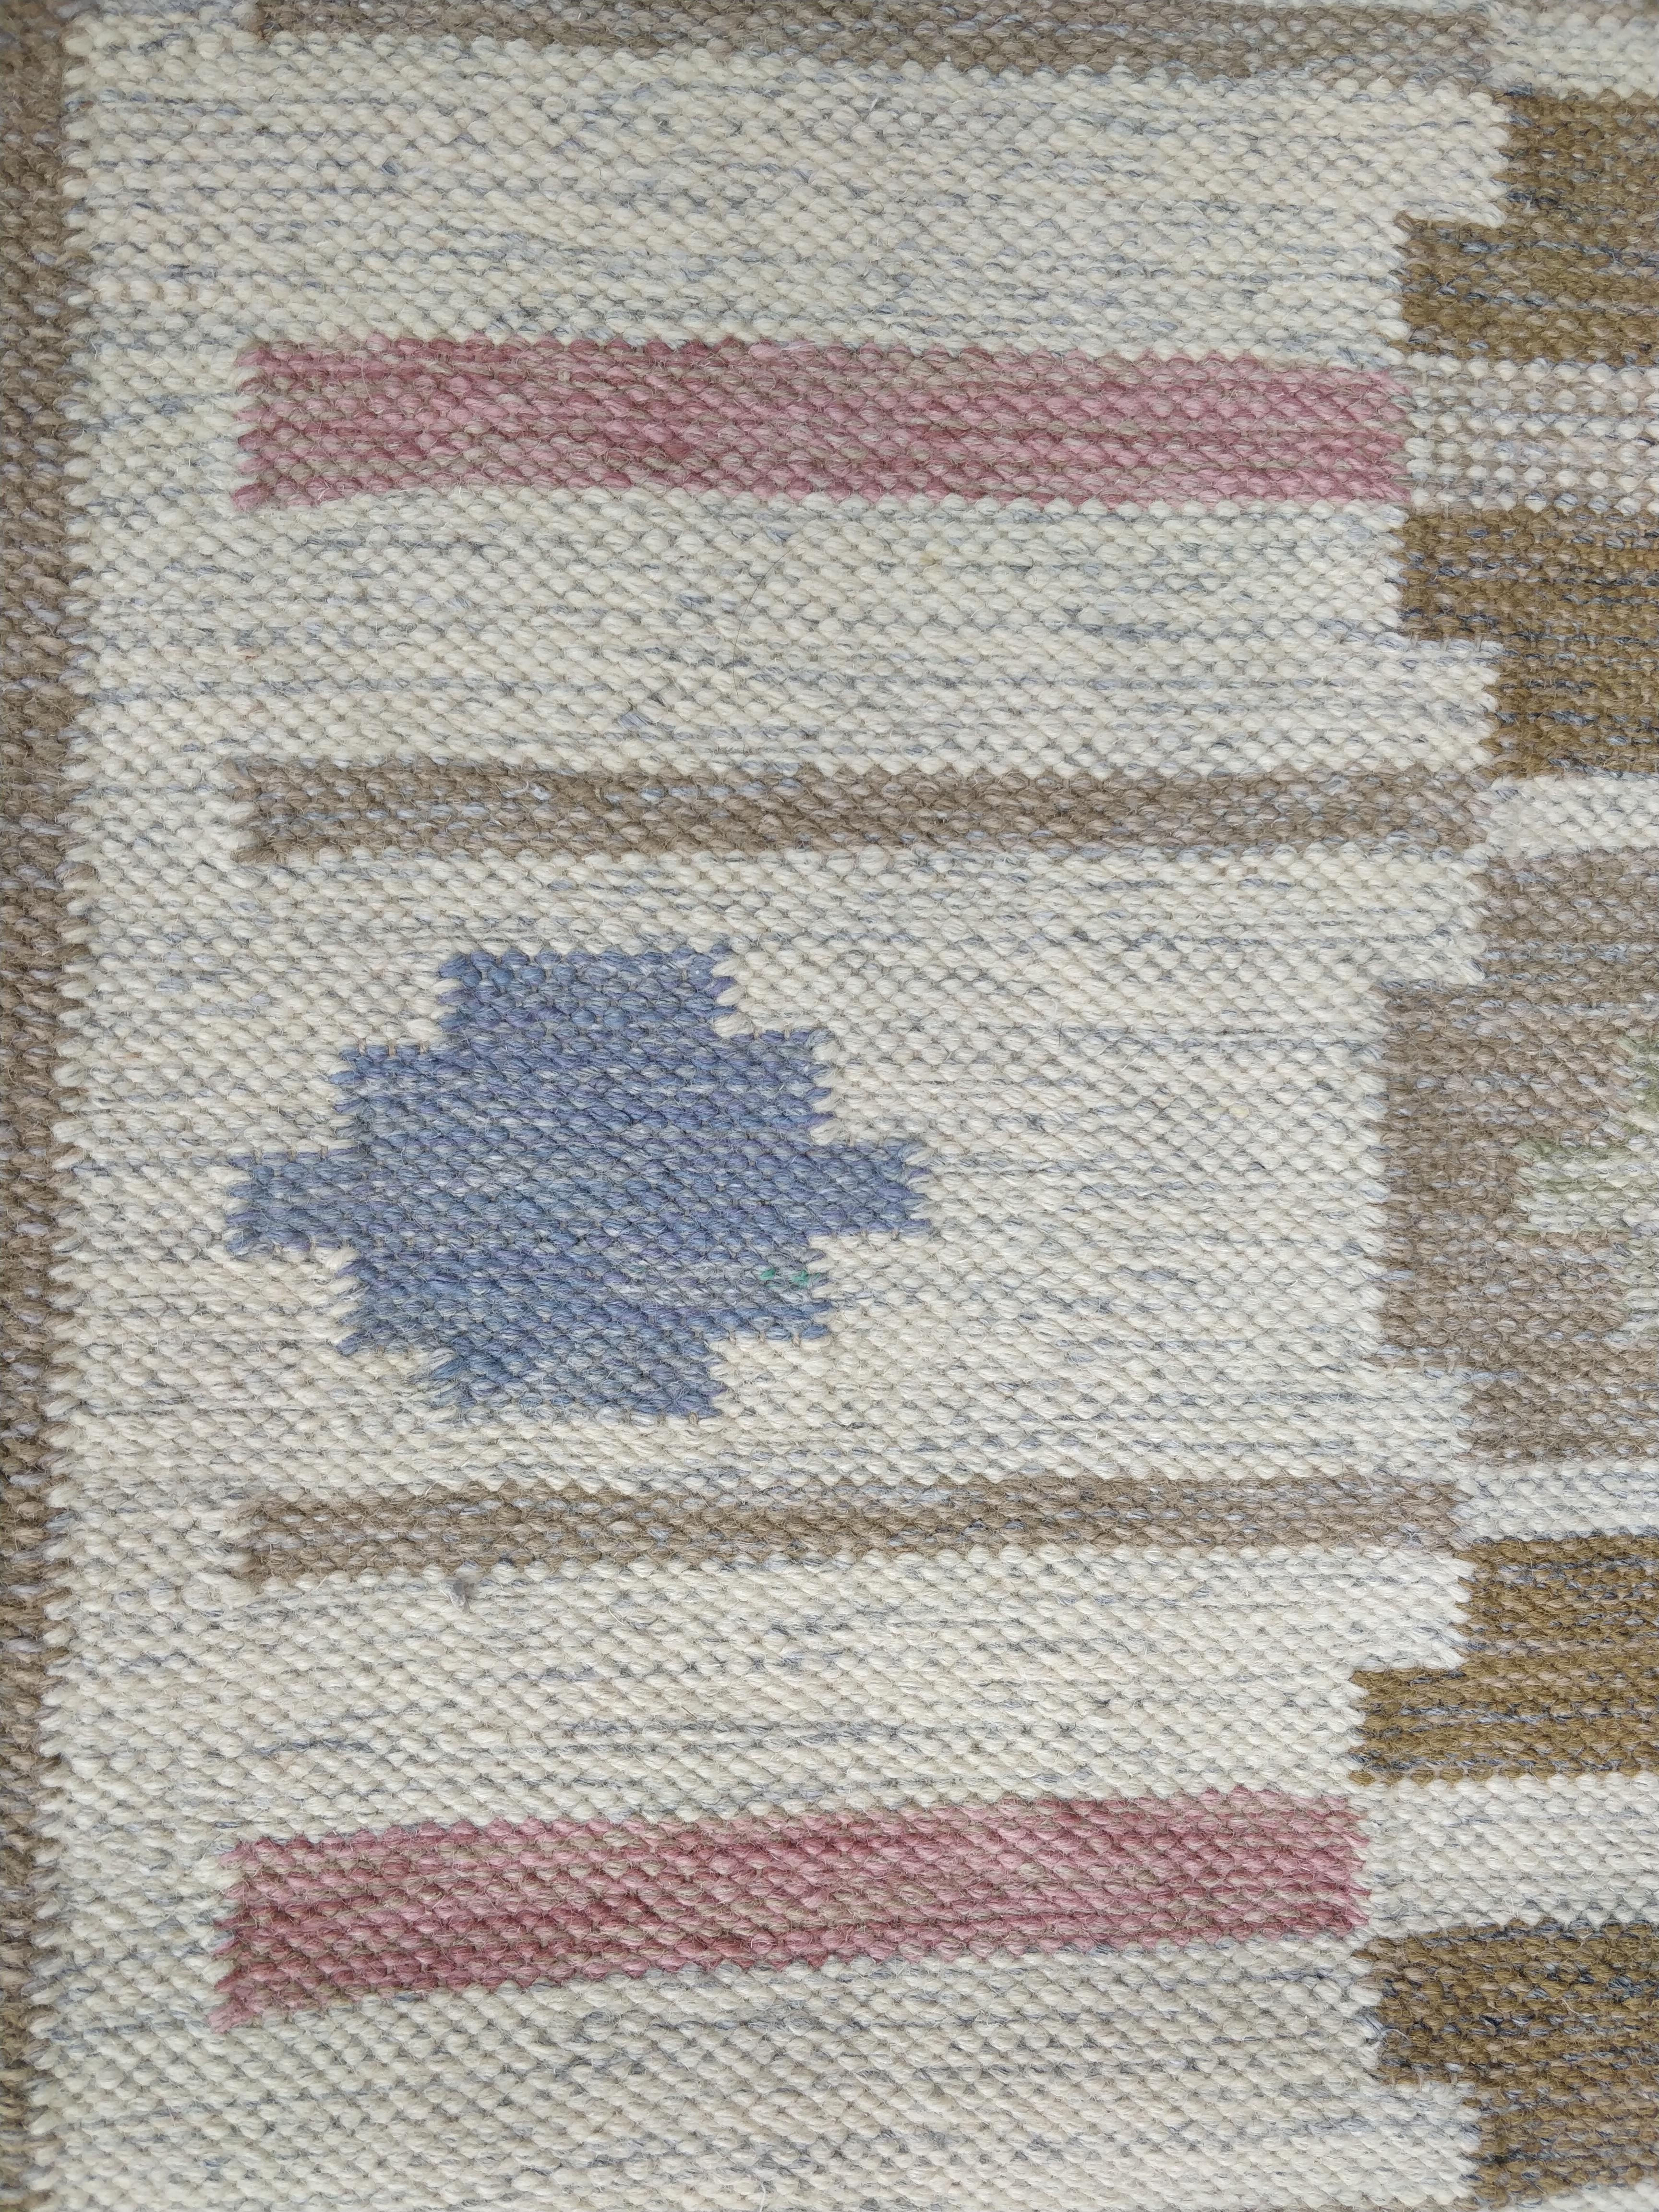  Flat-weave Kilim carpet by Swedish textile designer Anna Johanna Ångström   For Sale 3